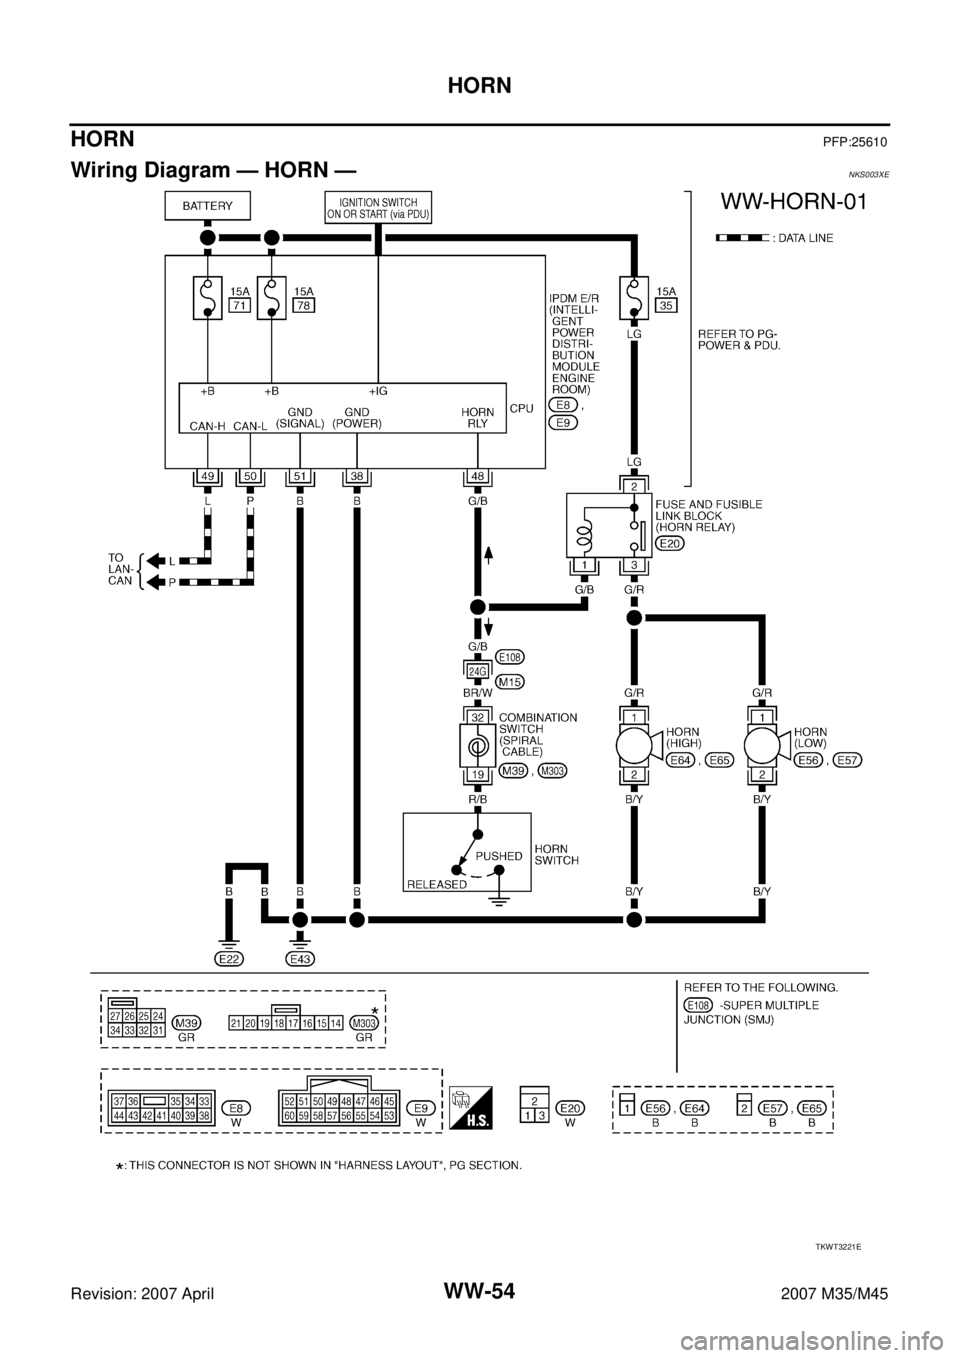 INFINITI M35 2007  Factory Service Manual WW-54
HORN
Revision: 2007 April2007 M35/M45
HORNPFP:25610
Wiring Diagram — HORN —NKS003XE
TKWT3221E 